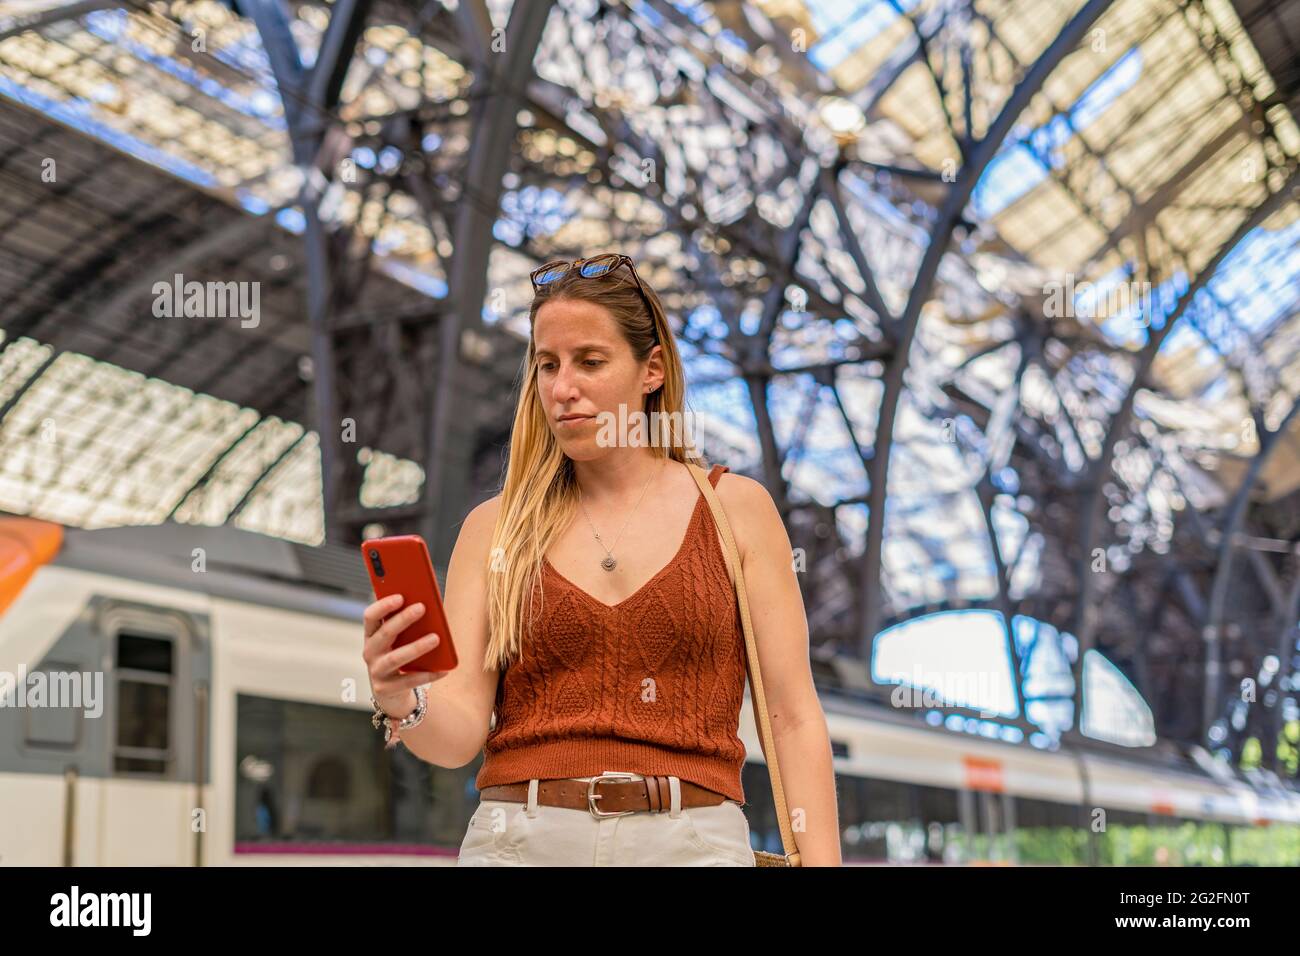 Young woman waiting at train station platform using smart phone Stock Photo